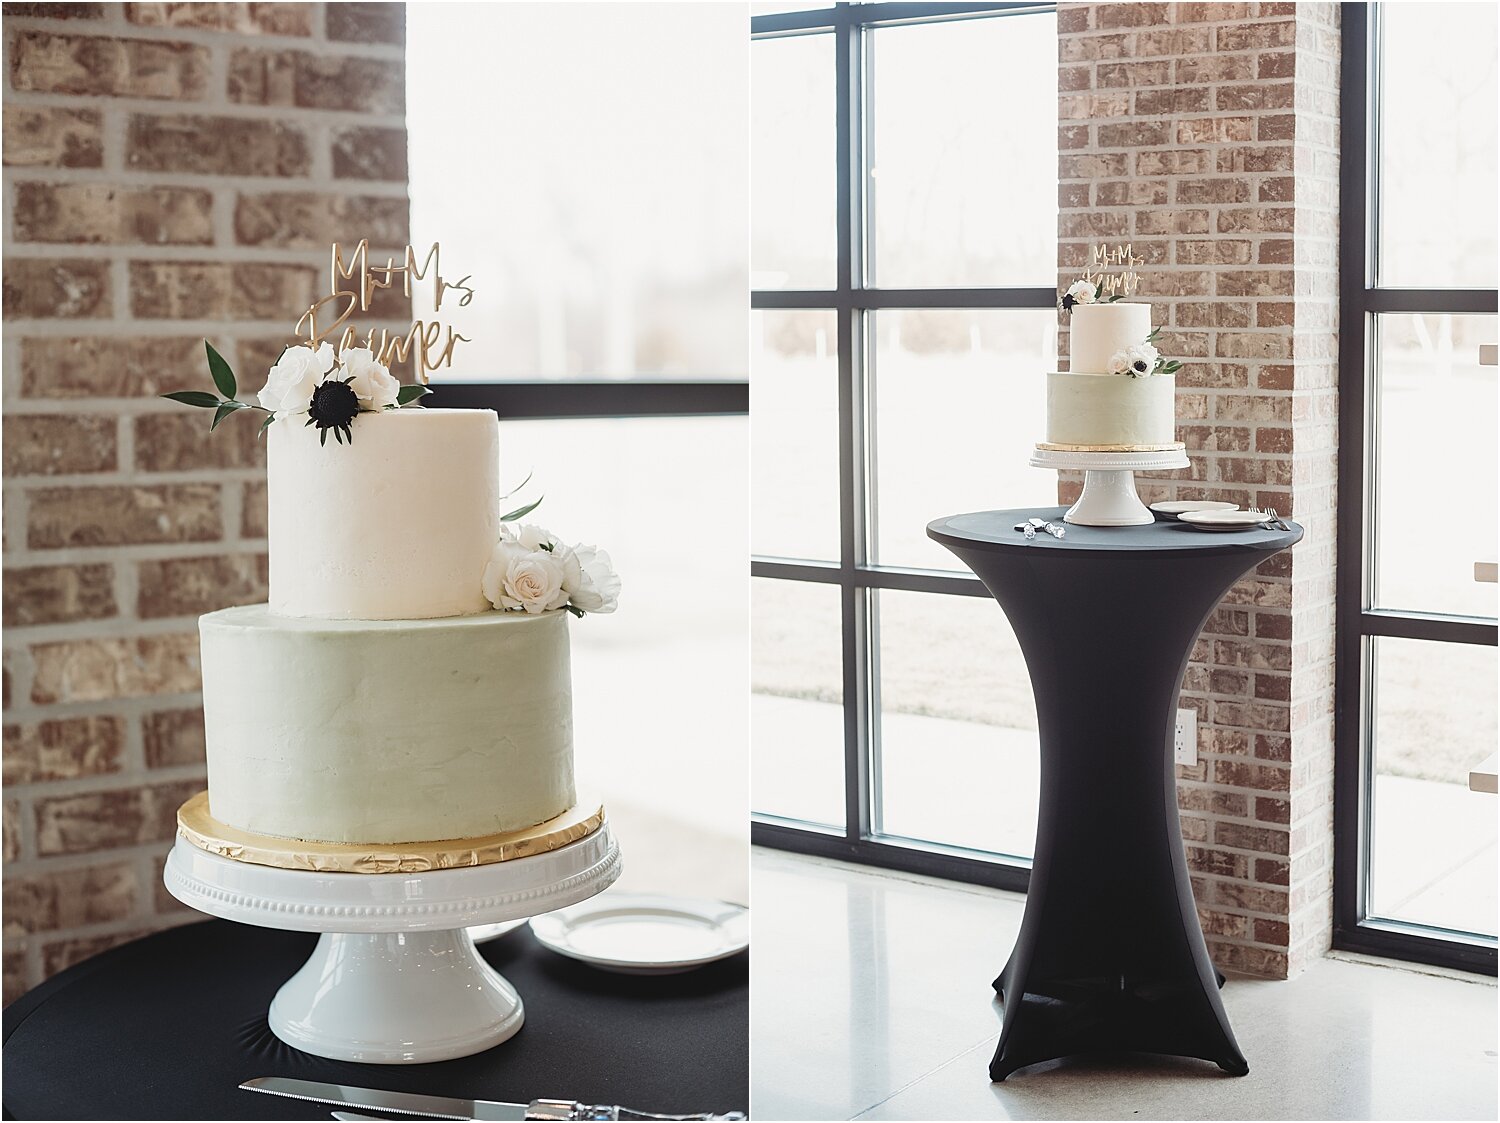 neutral wedding cake two tier formal wedding